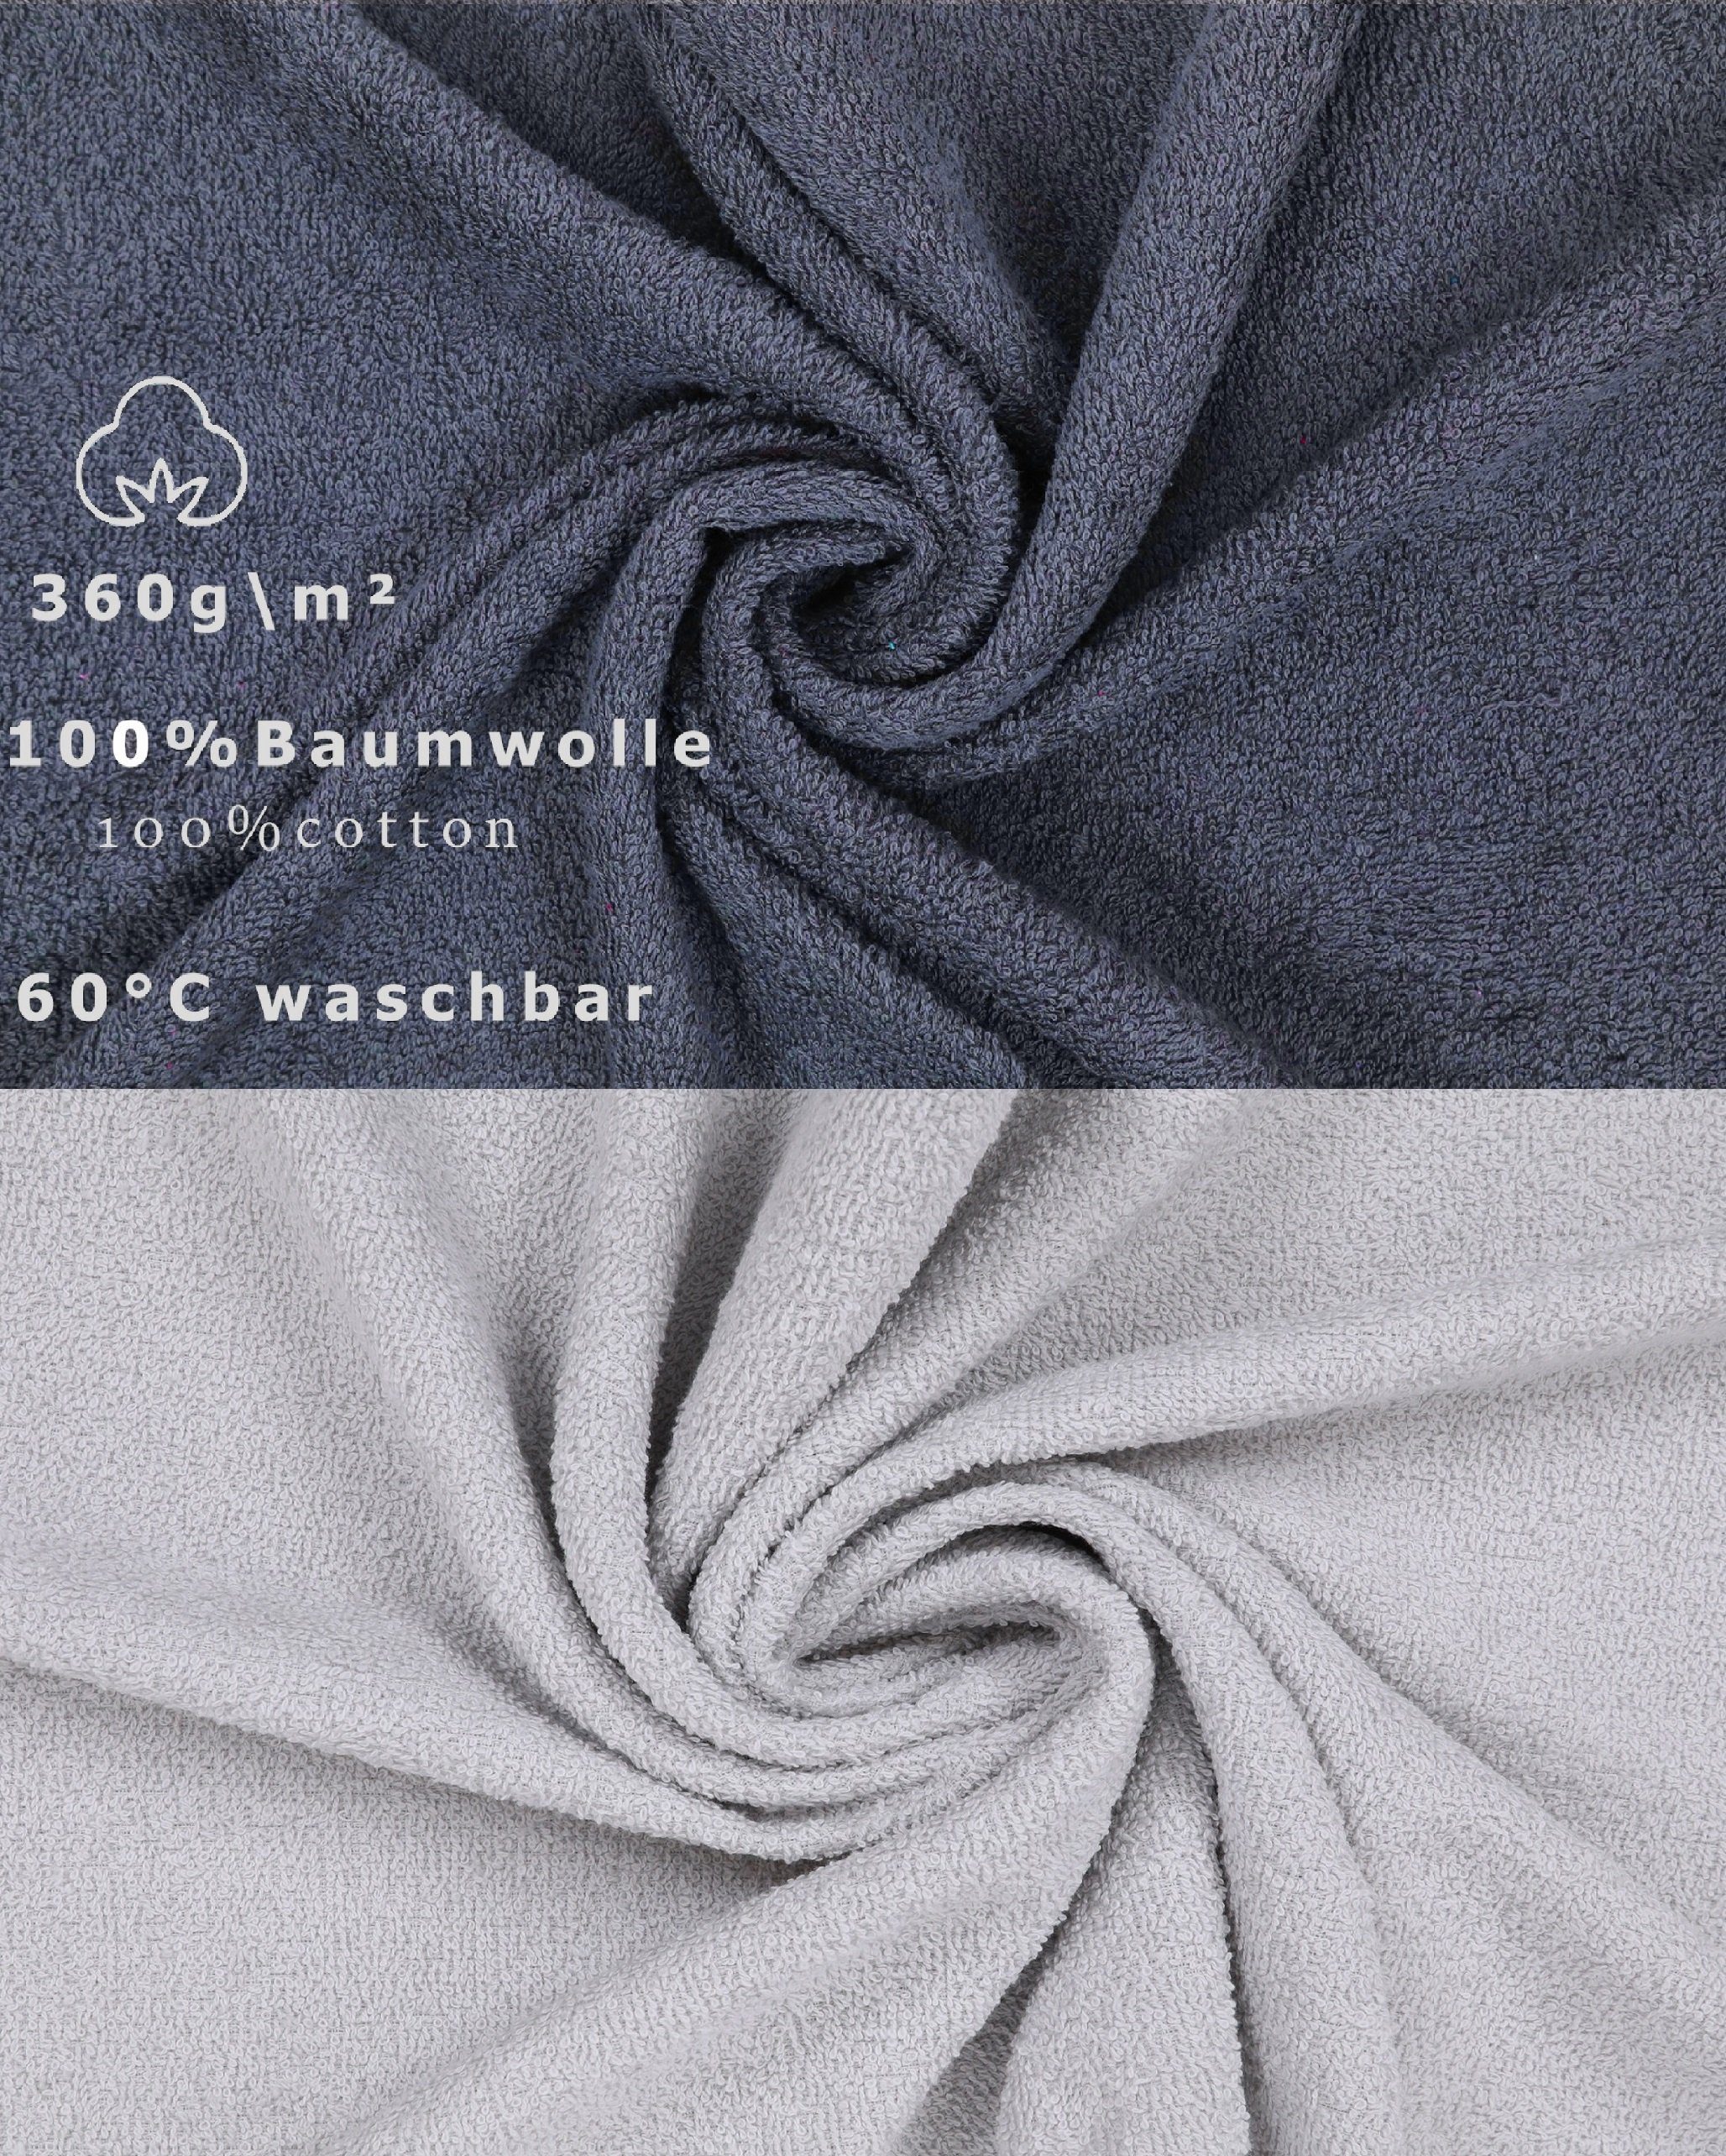 Betz Handtuch Set 12 Farbe Silbergrau - BERLIN TLG. dunkelgrau, 100% Baumwolle Handtuch Set